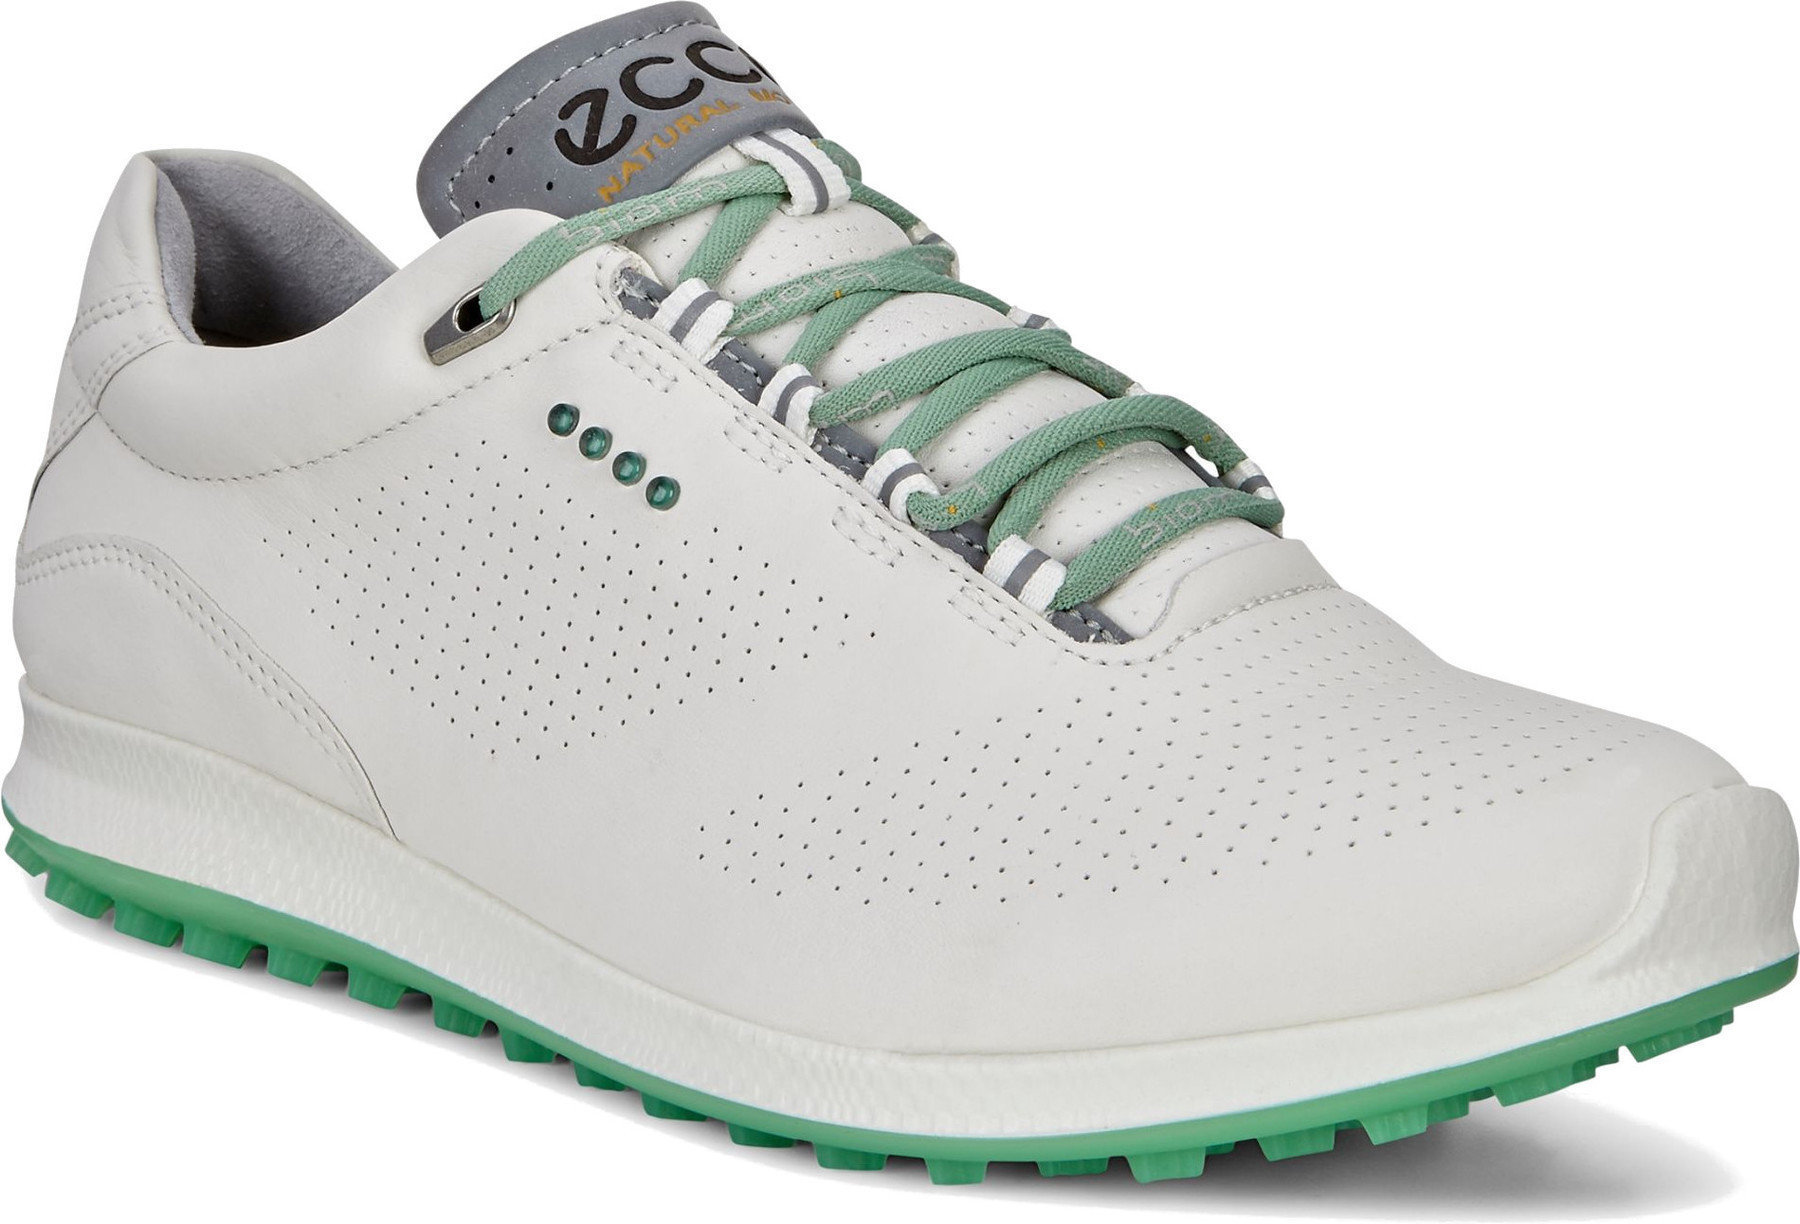 Chaussures de golf pour femmes Ecco Biom Hybrid 2 Chaussures de Golf Femmes White/Granite Green 41